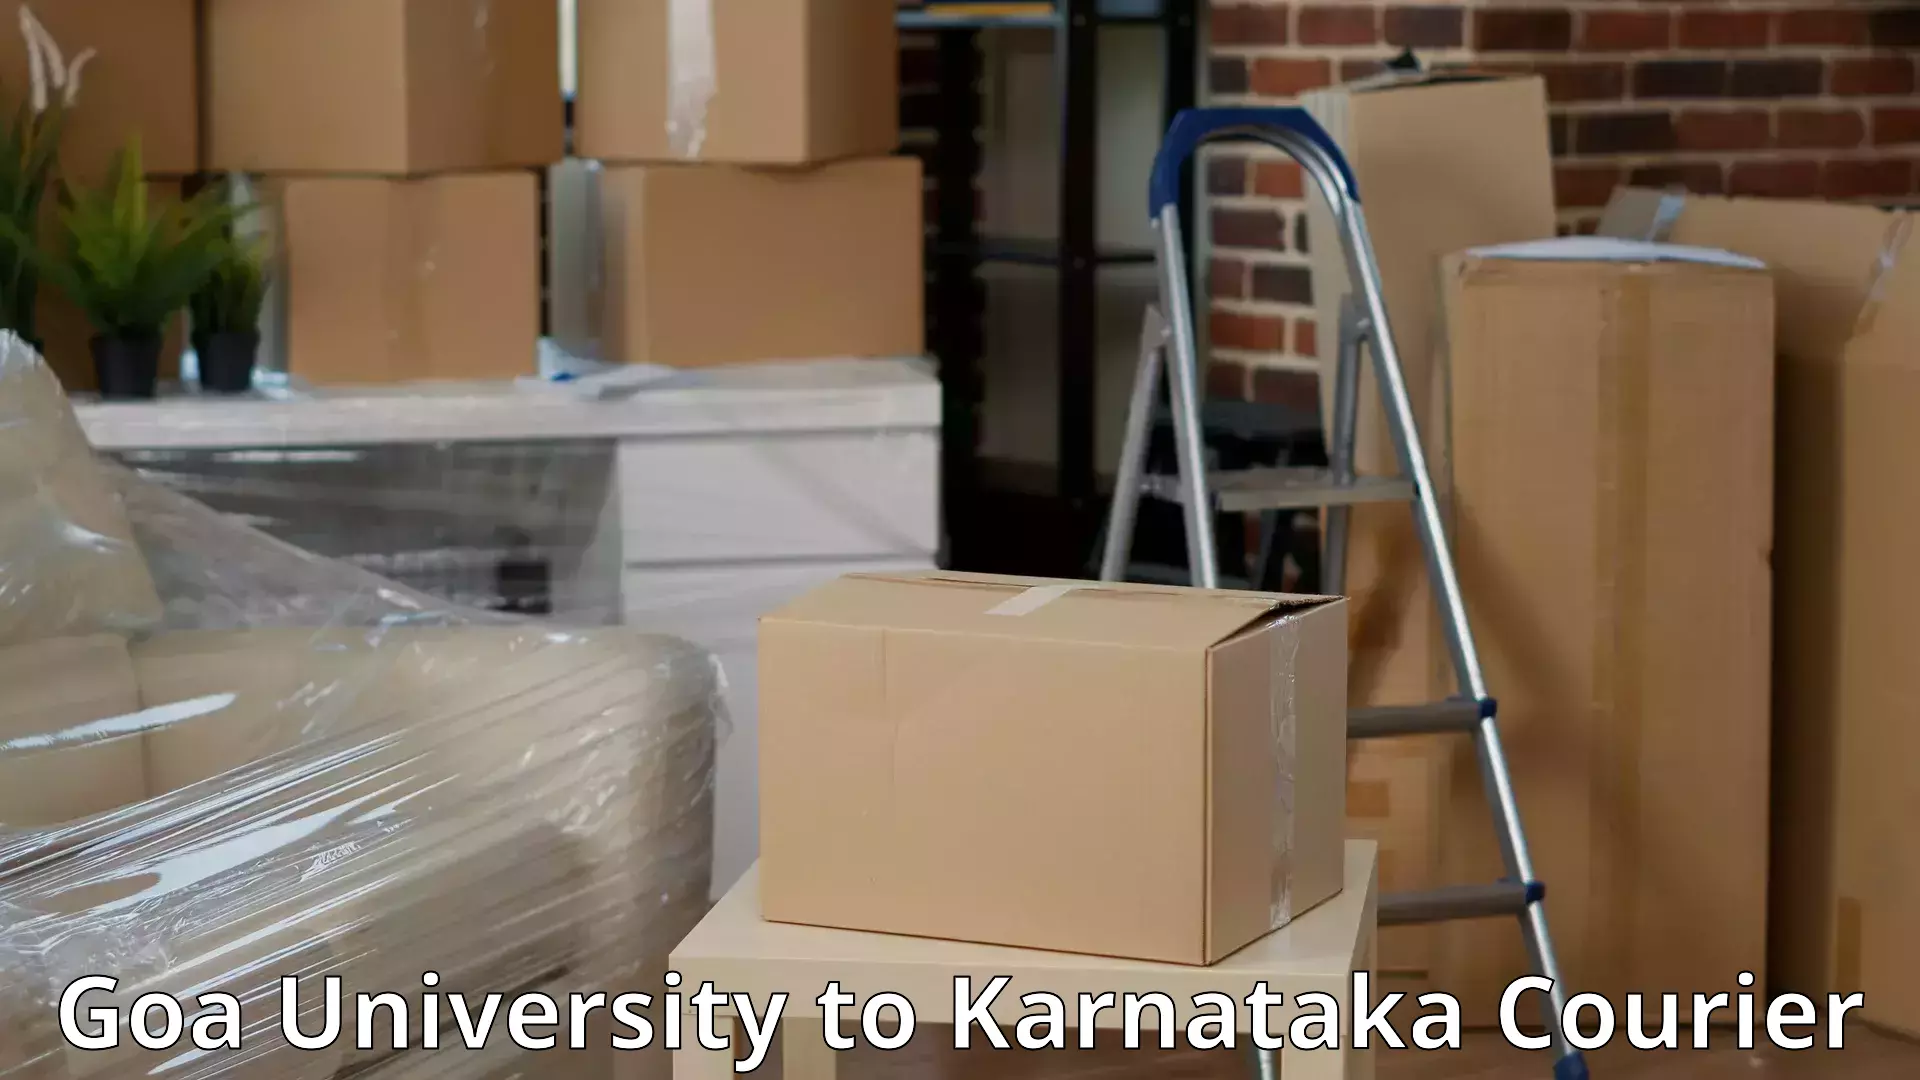 Furniture moving experts Goa University to Yellare